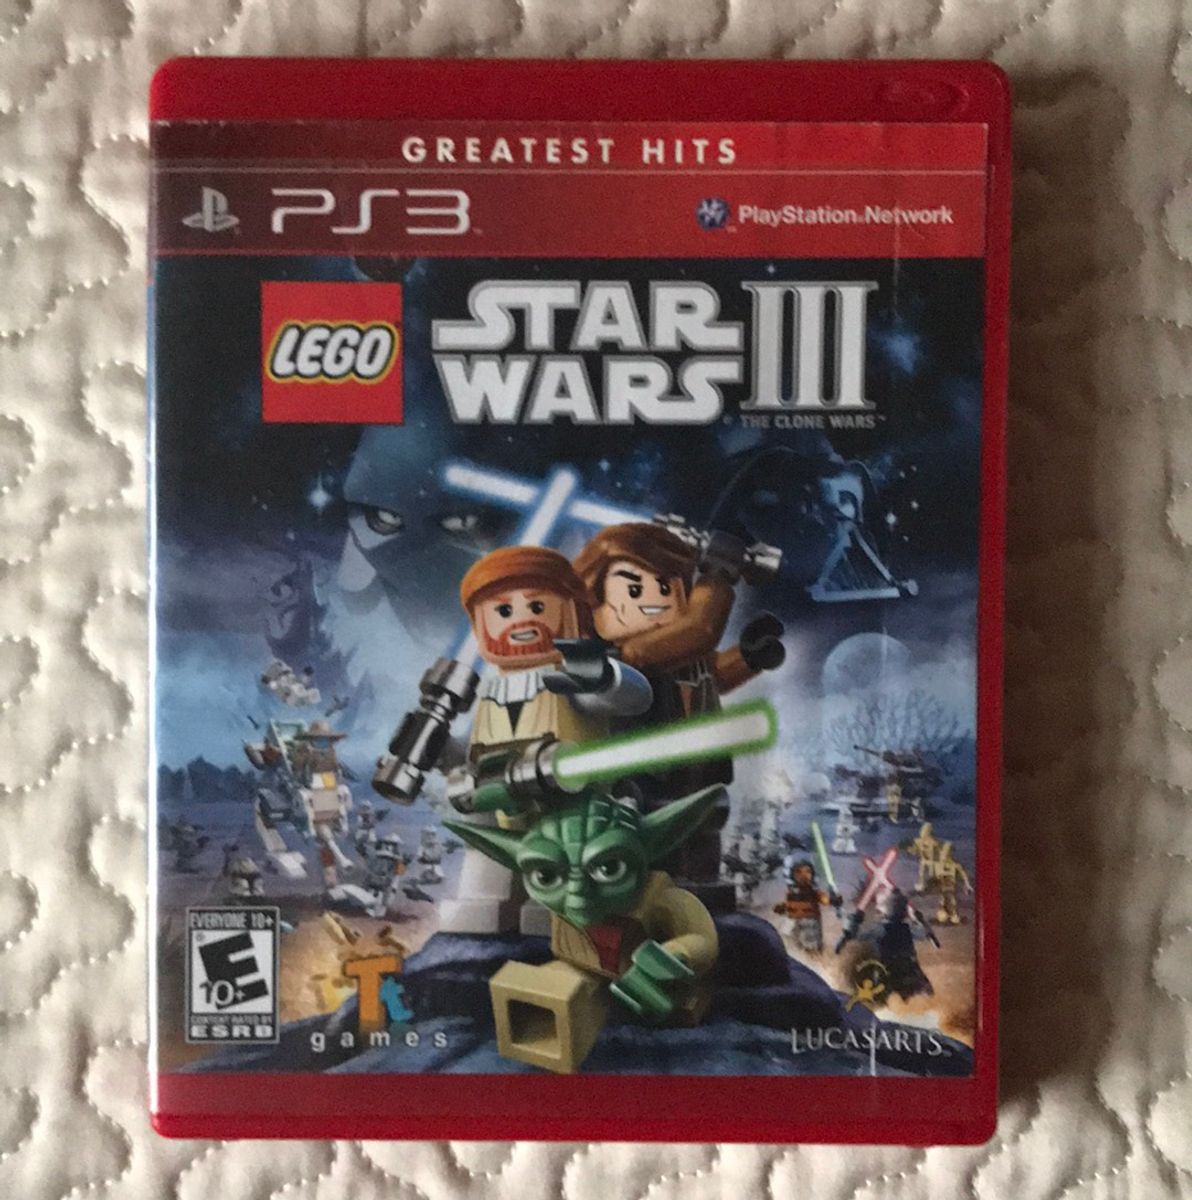 Jogo PS3 LEGO Star Wars: The Force Awakens